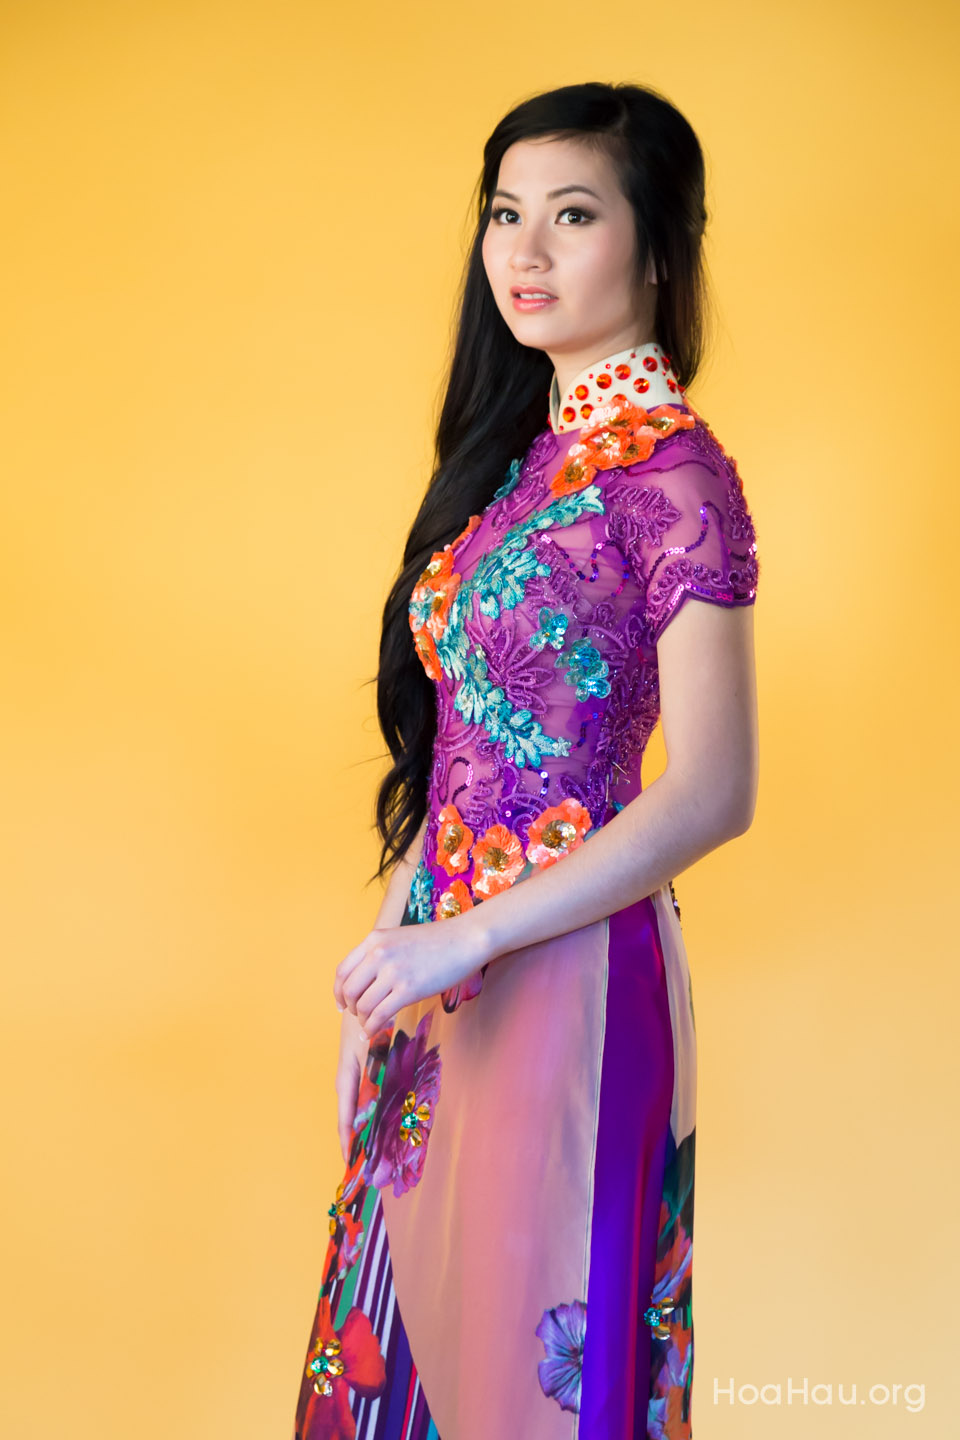 Calendar 2014 Photoshoot - Miss Vietnam of Northern California 2014 - Image 125